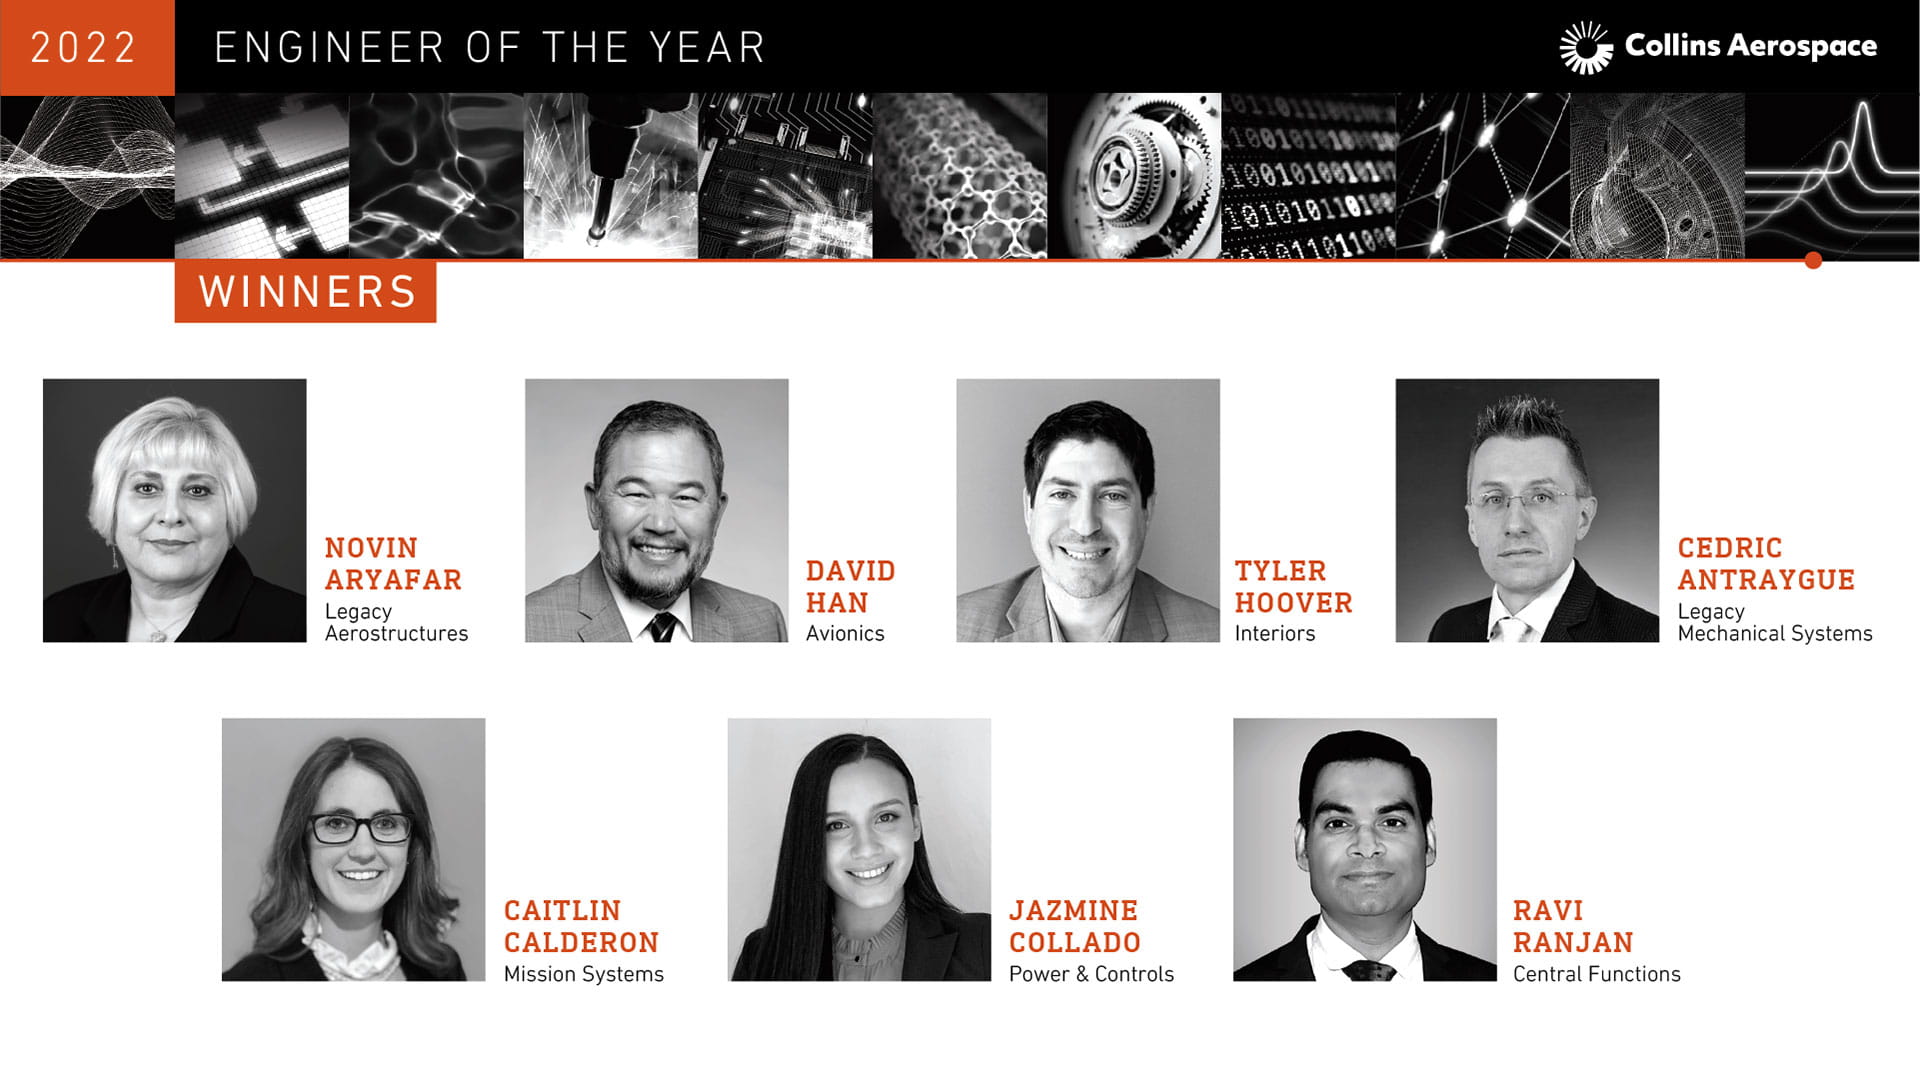 7 Engineer of the Year Award Winners